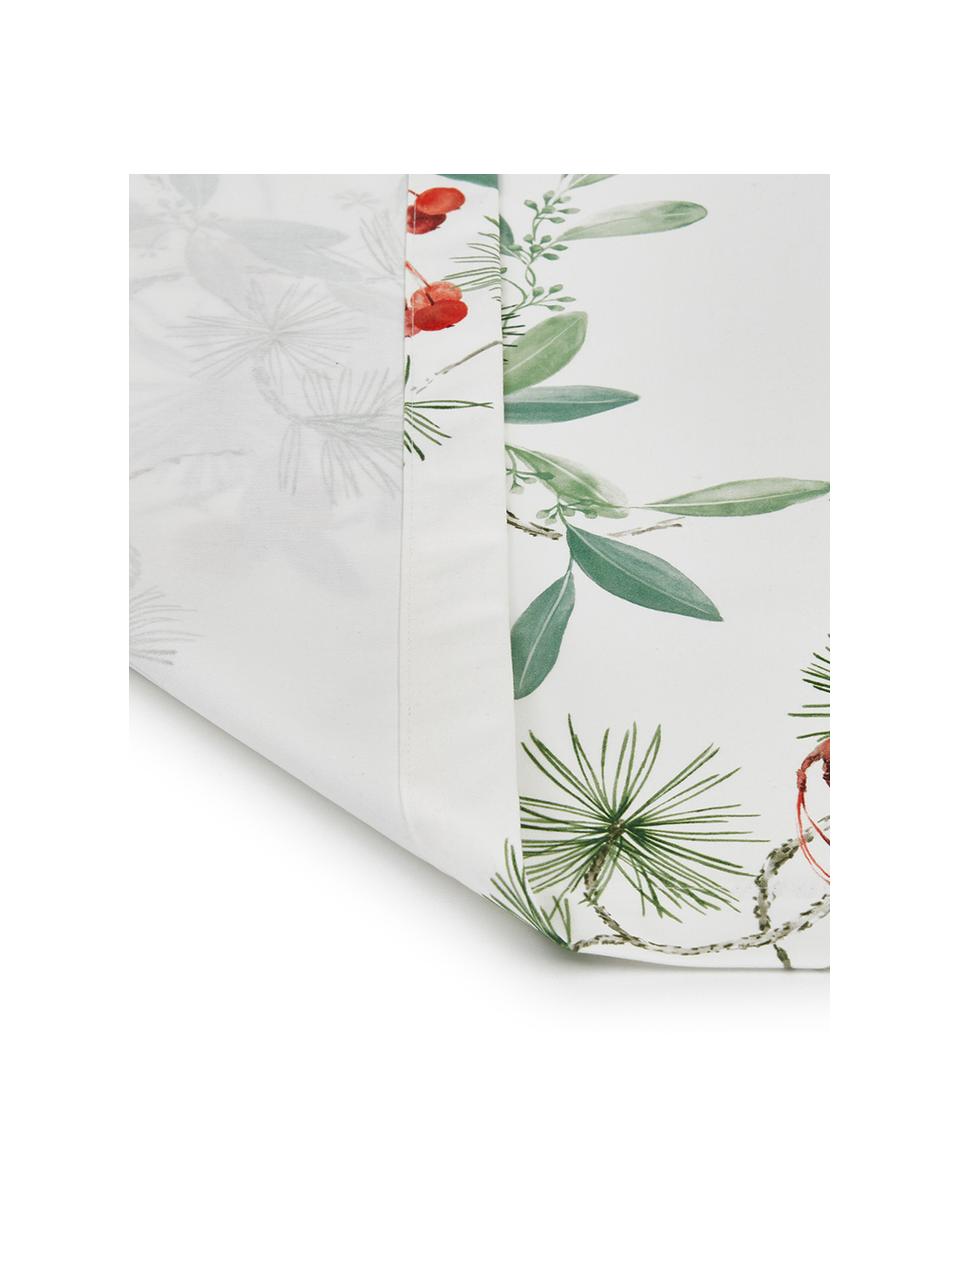 Tafelloper Myrta, Katoen, Wit, groen, rood, 50 x 140 cm